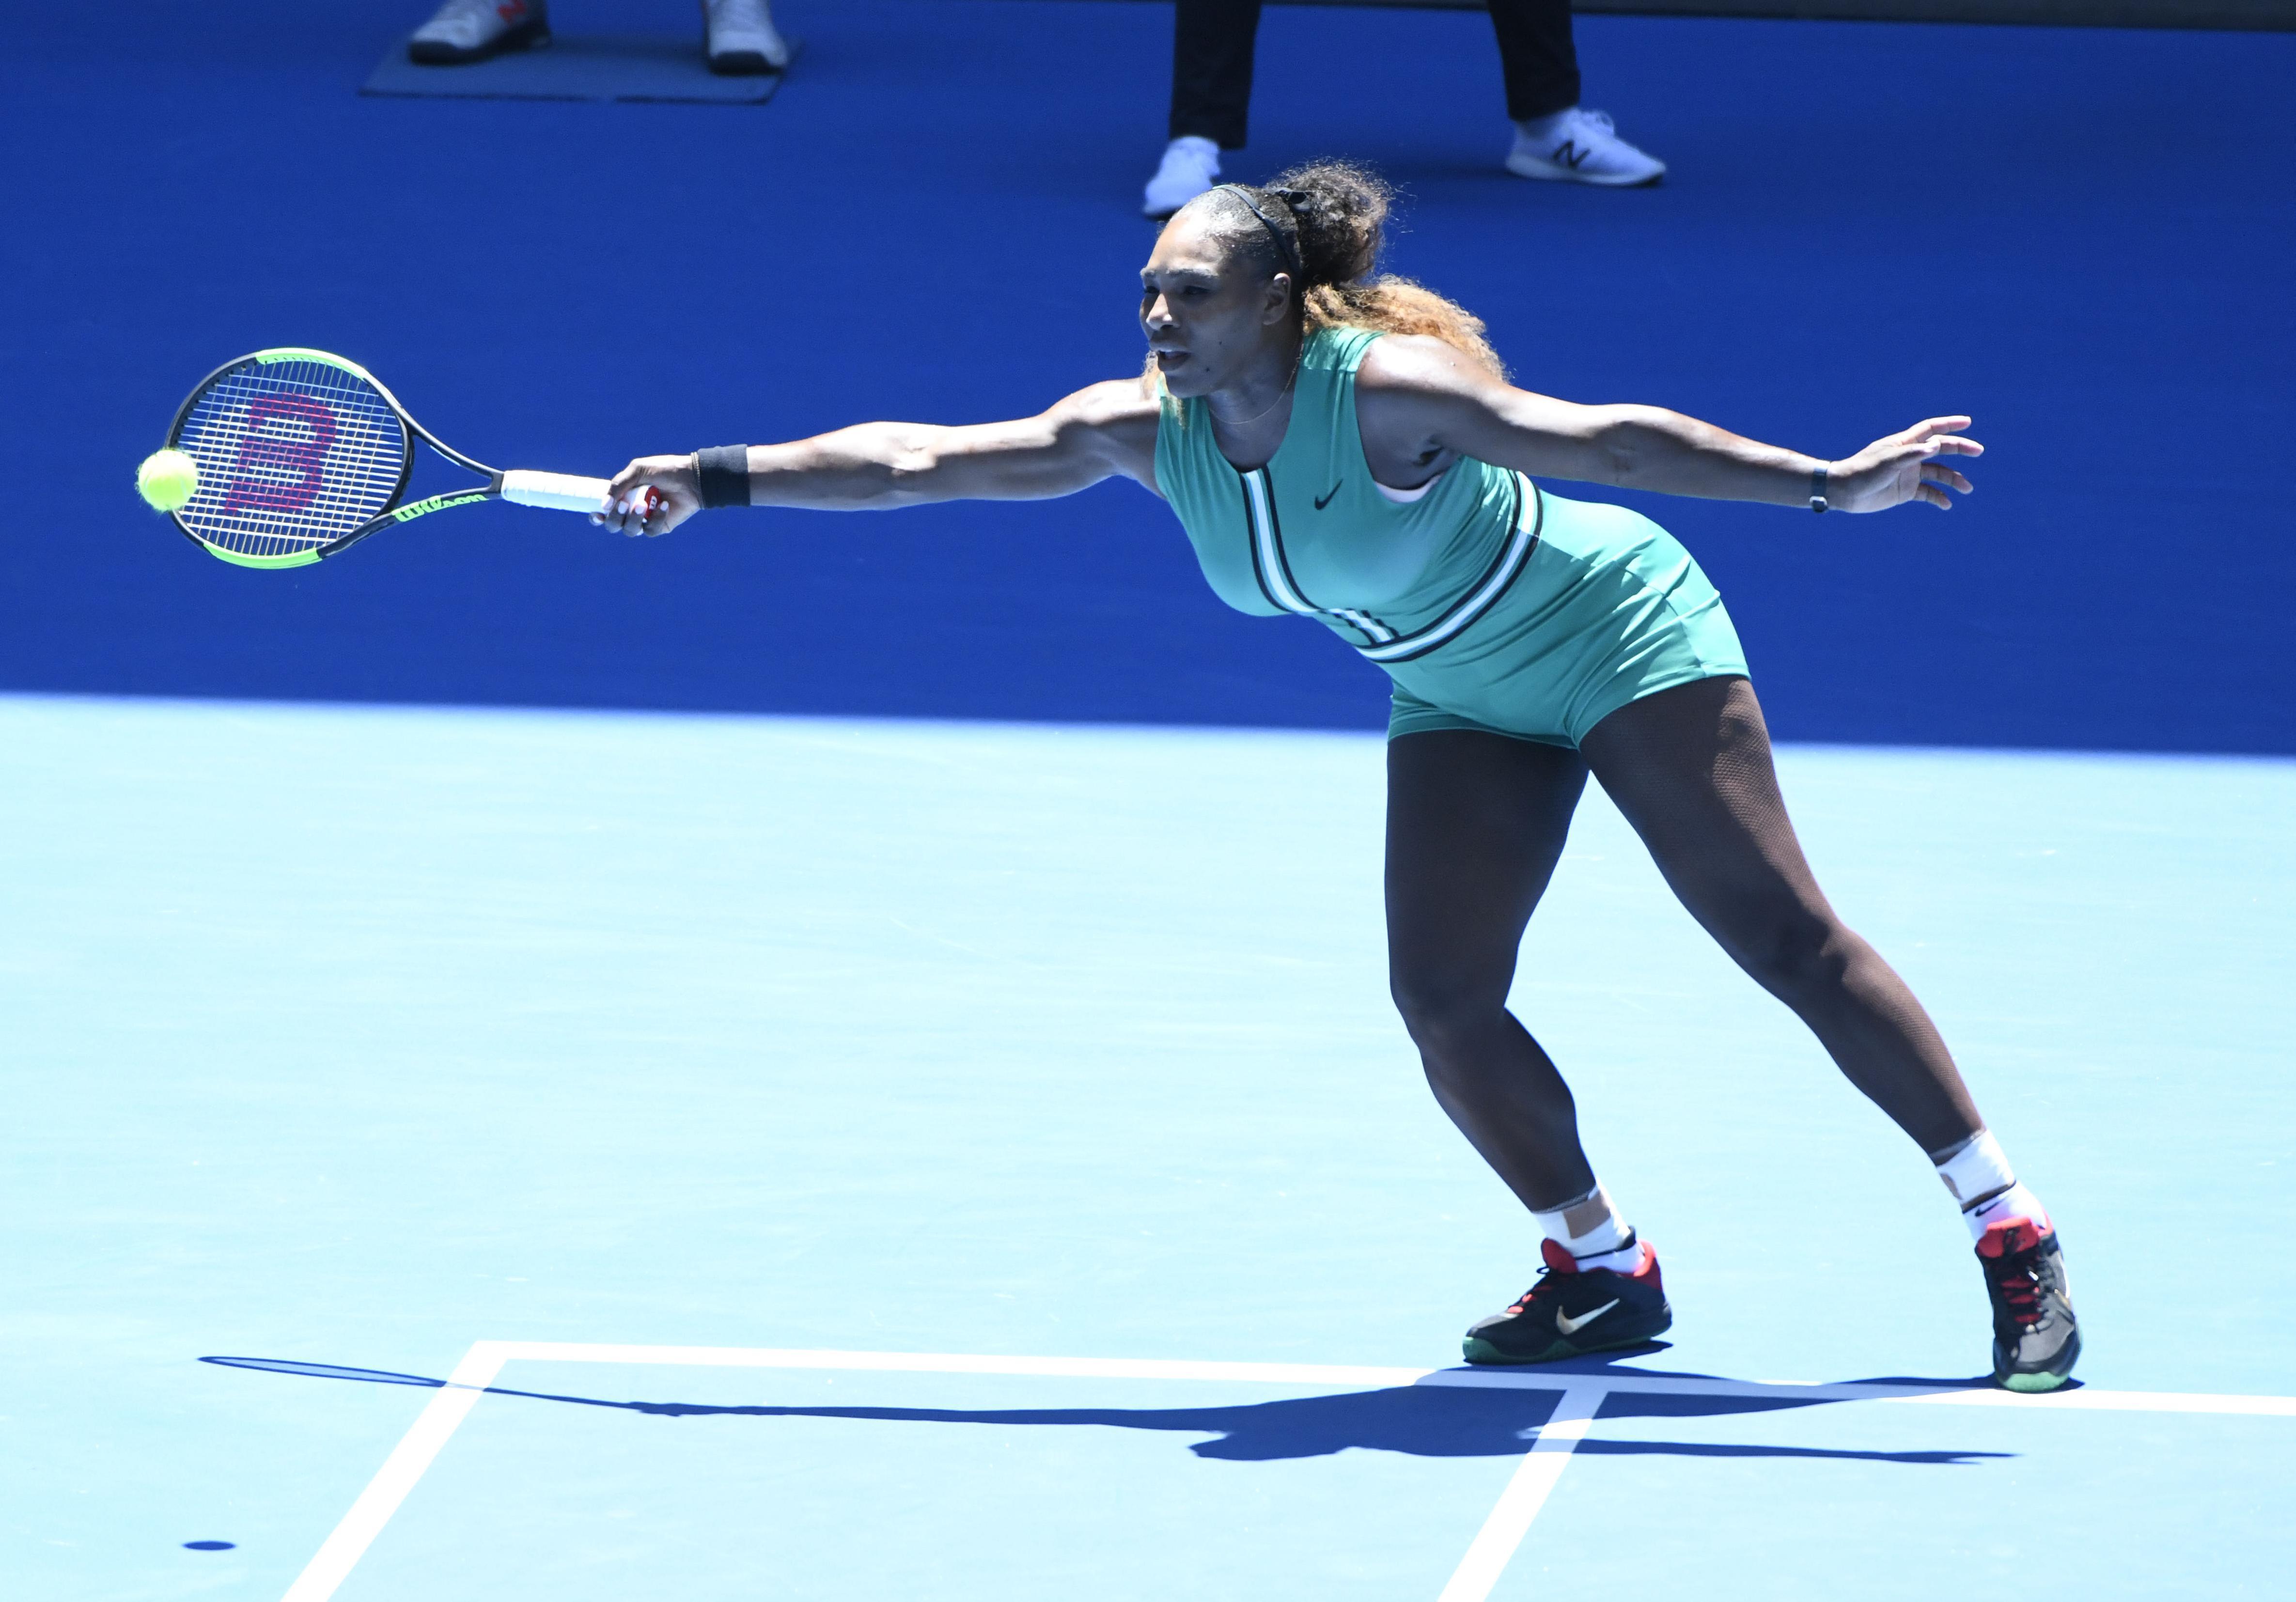 Avustralya Açıkta Serena Williams elendi